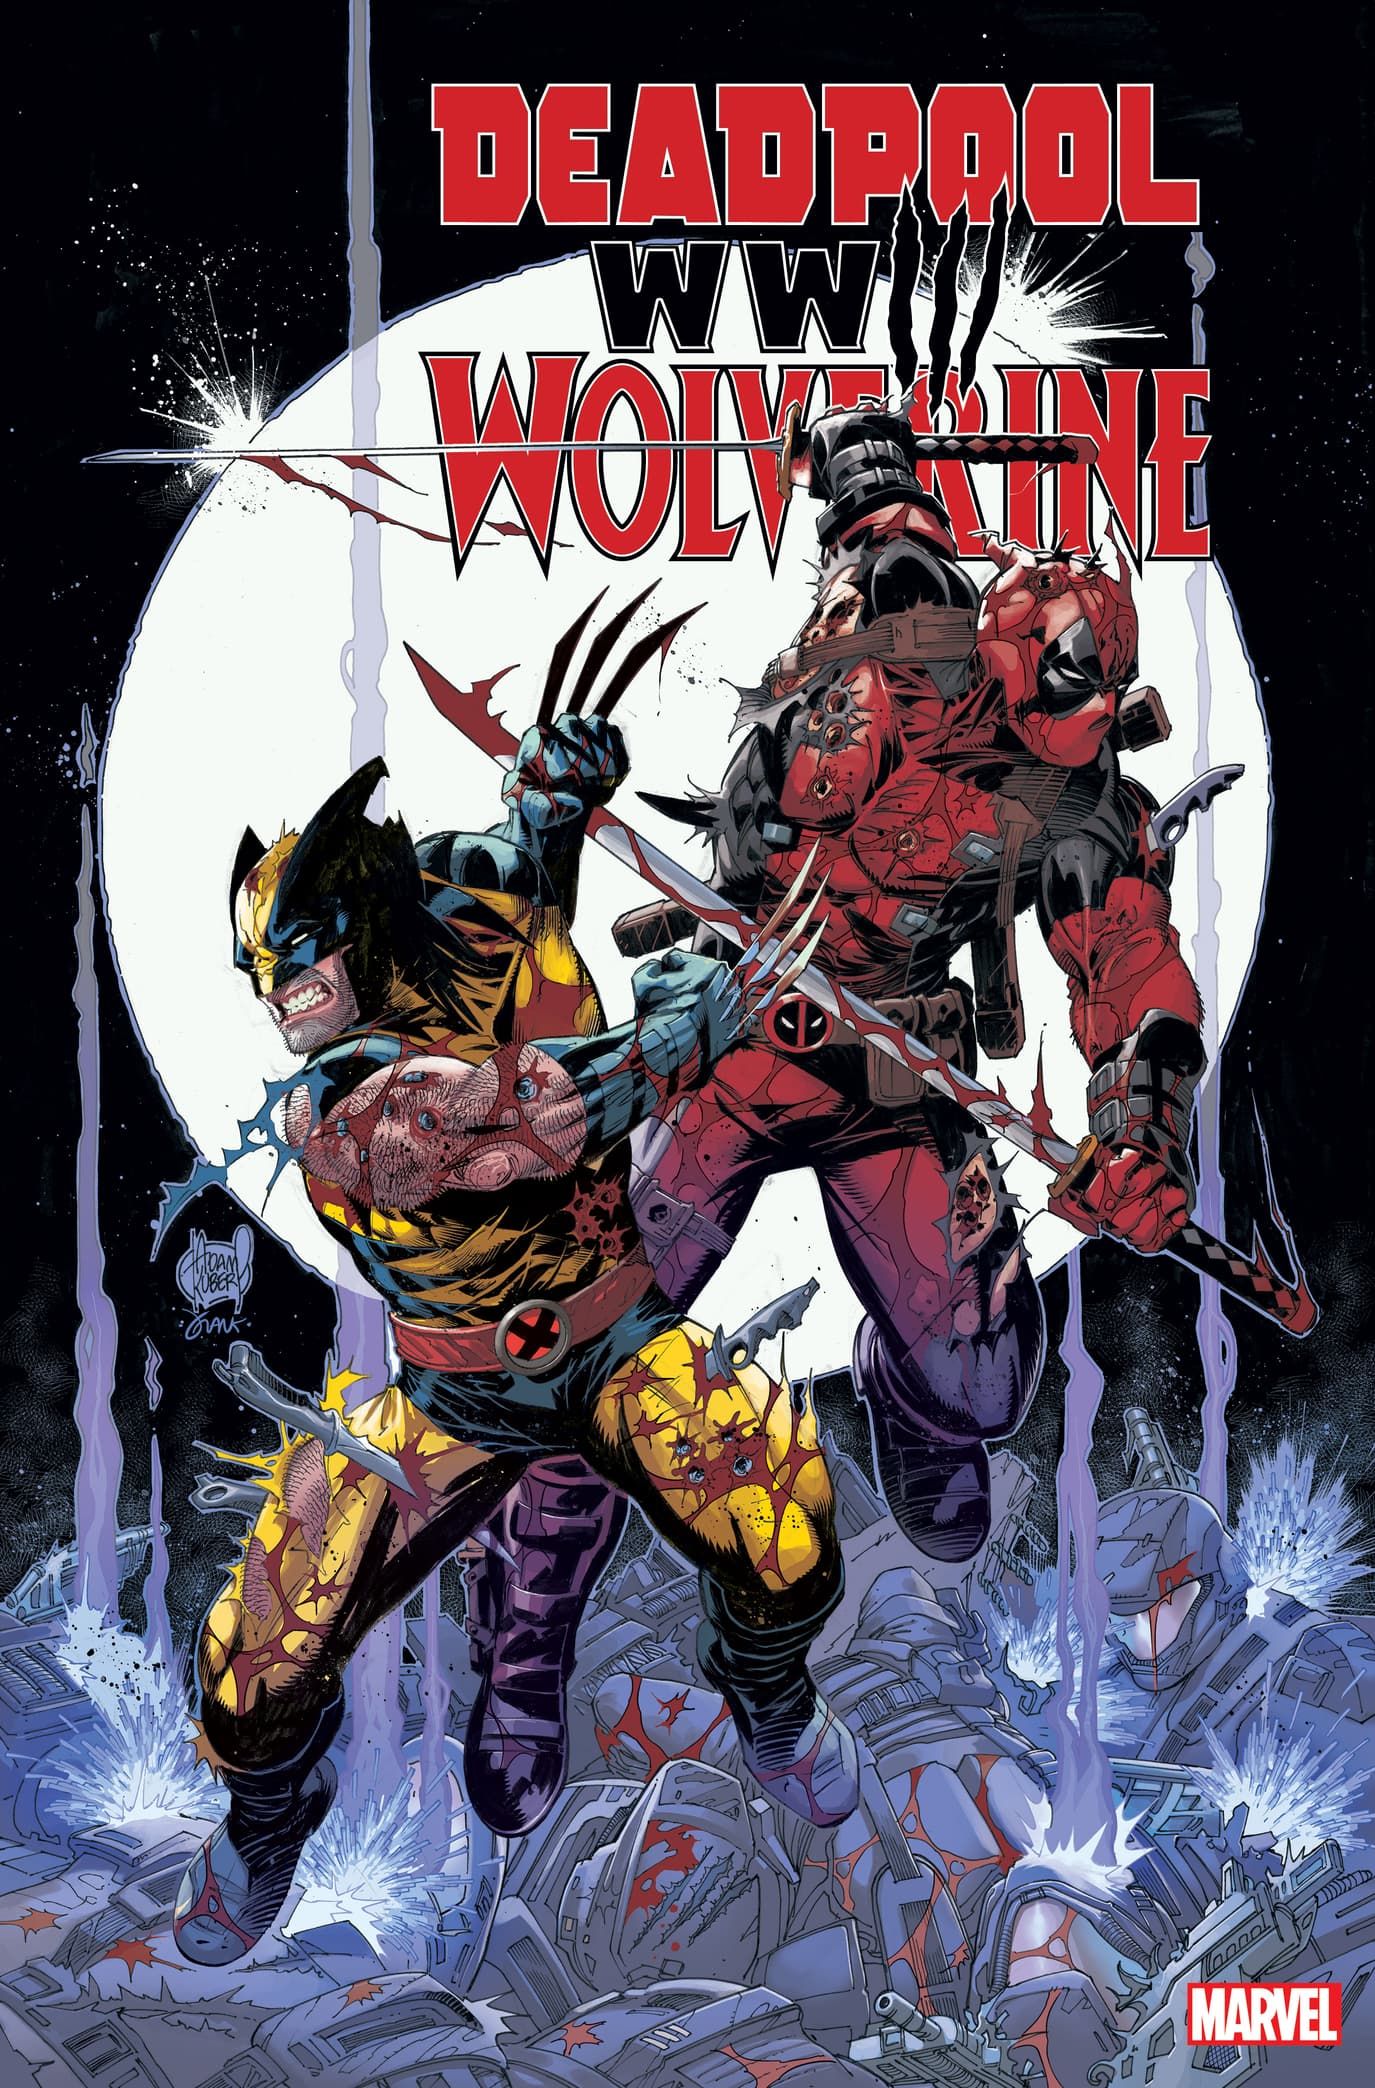 Capa nº 1 da Segunda Guerra Mundial de Deadpool e Wolverine